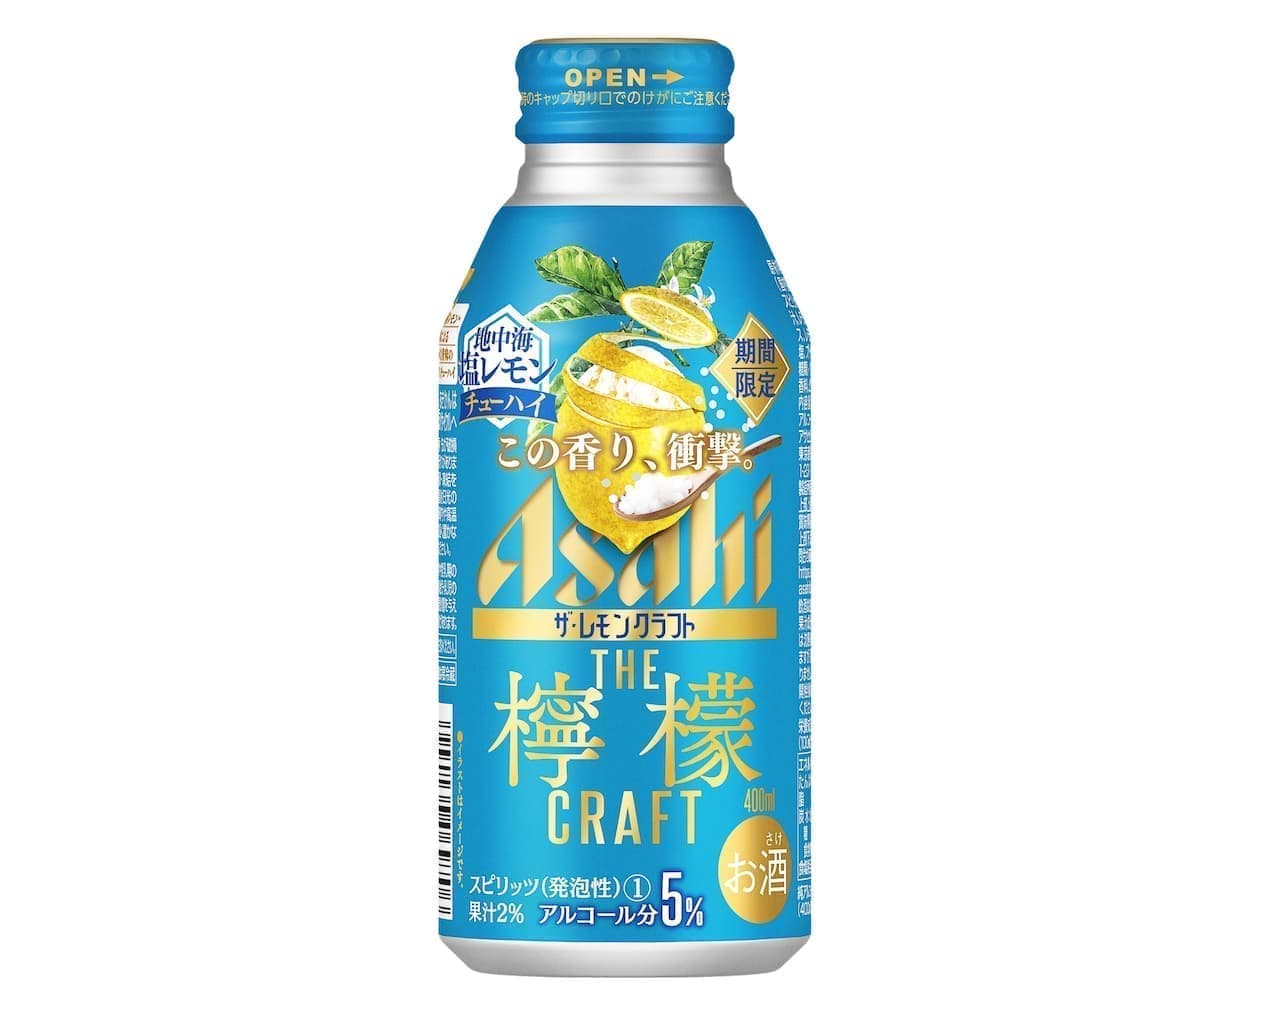 Asahi The Lemon Craft Limited Time Mediterranean Salt Lemon" from Asahi Breweries, Ltd.